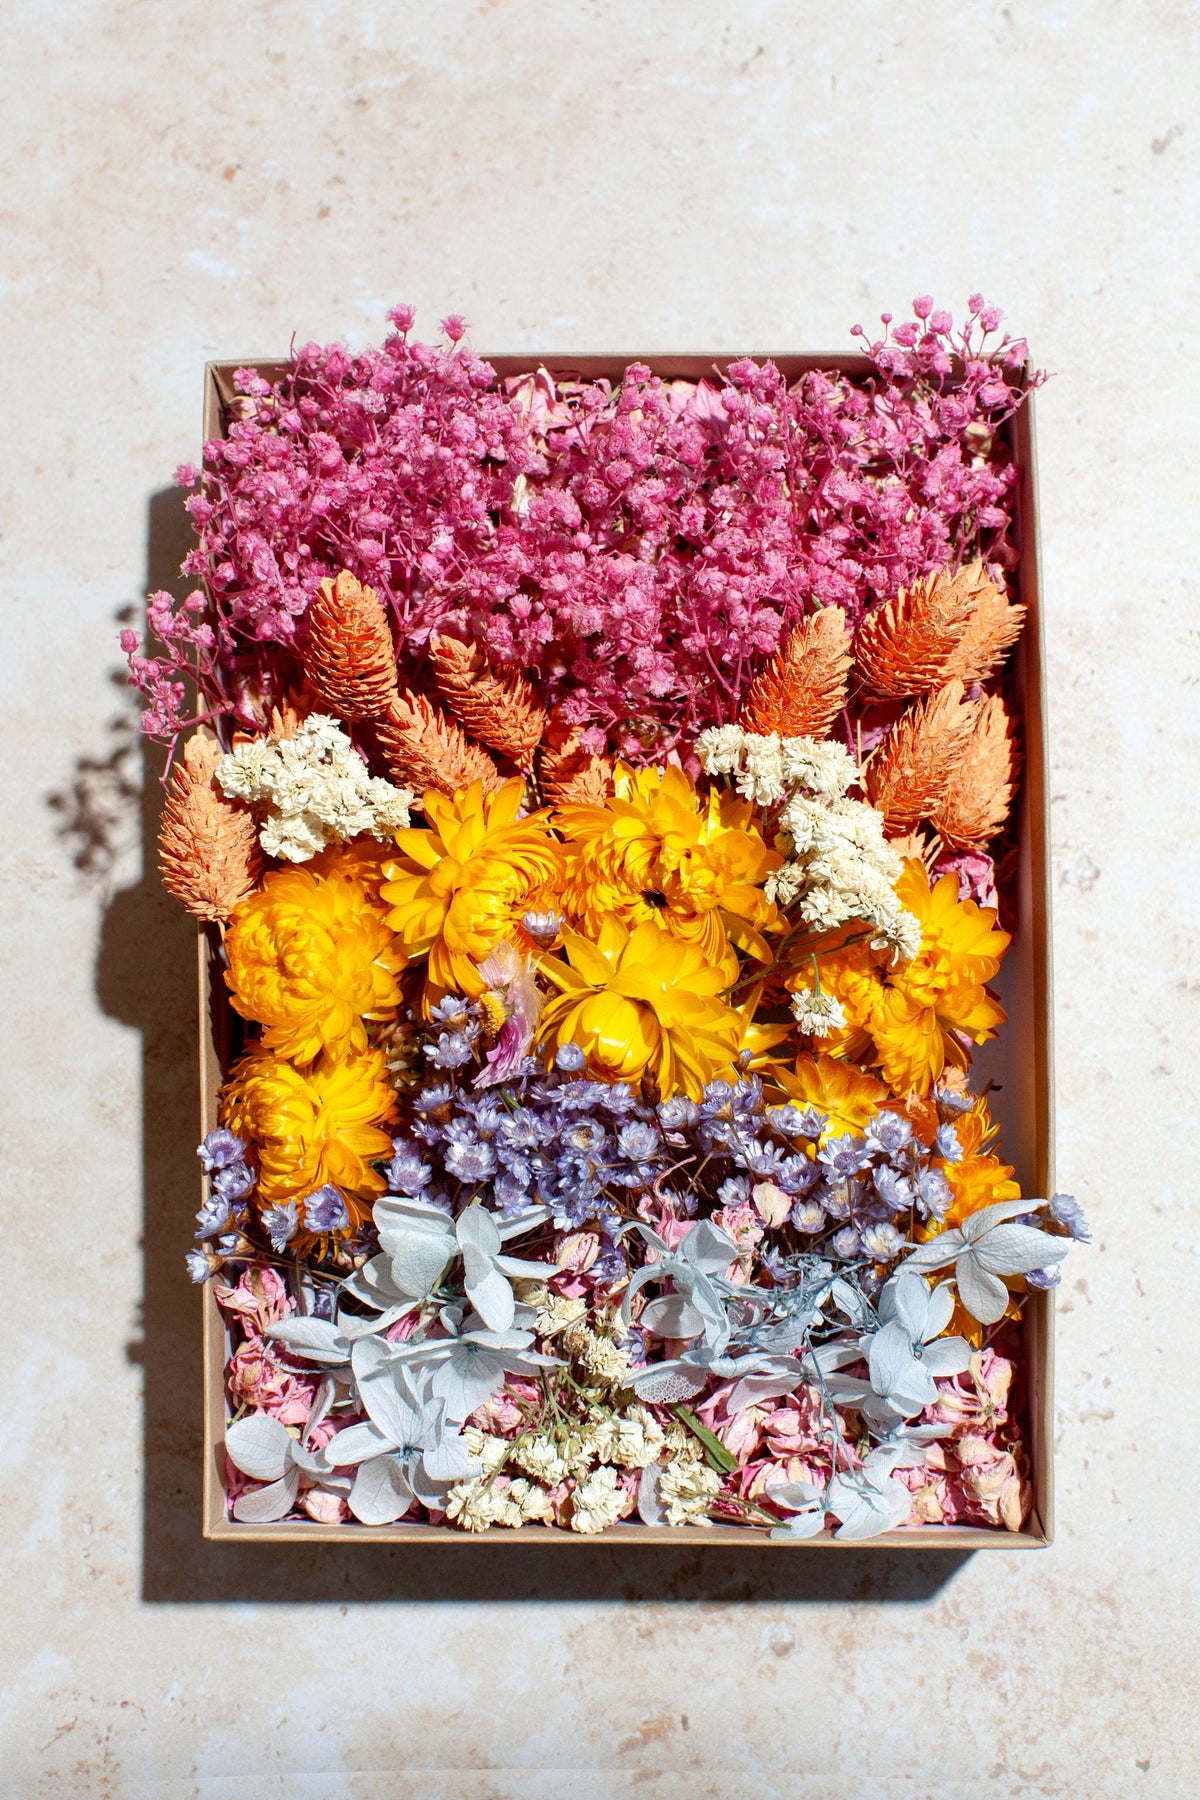 Dried Flower Confetti - Set of 12